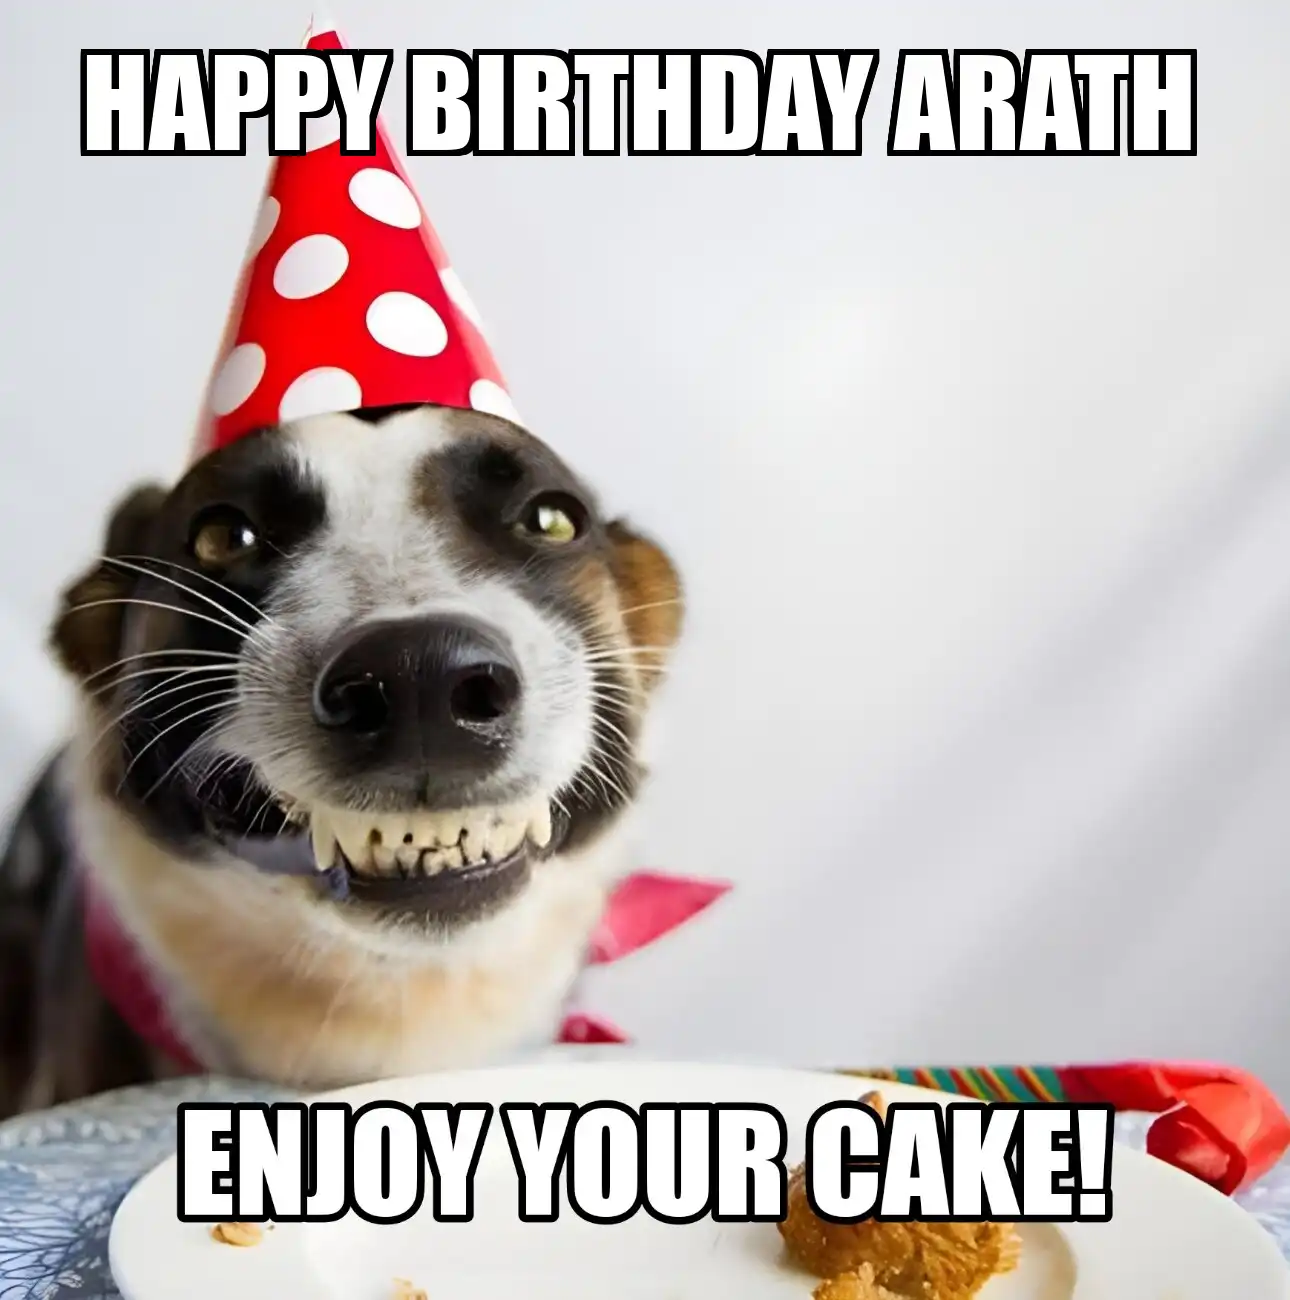 Happy Birthday Arath Enjoy Your Cake Dog Meme